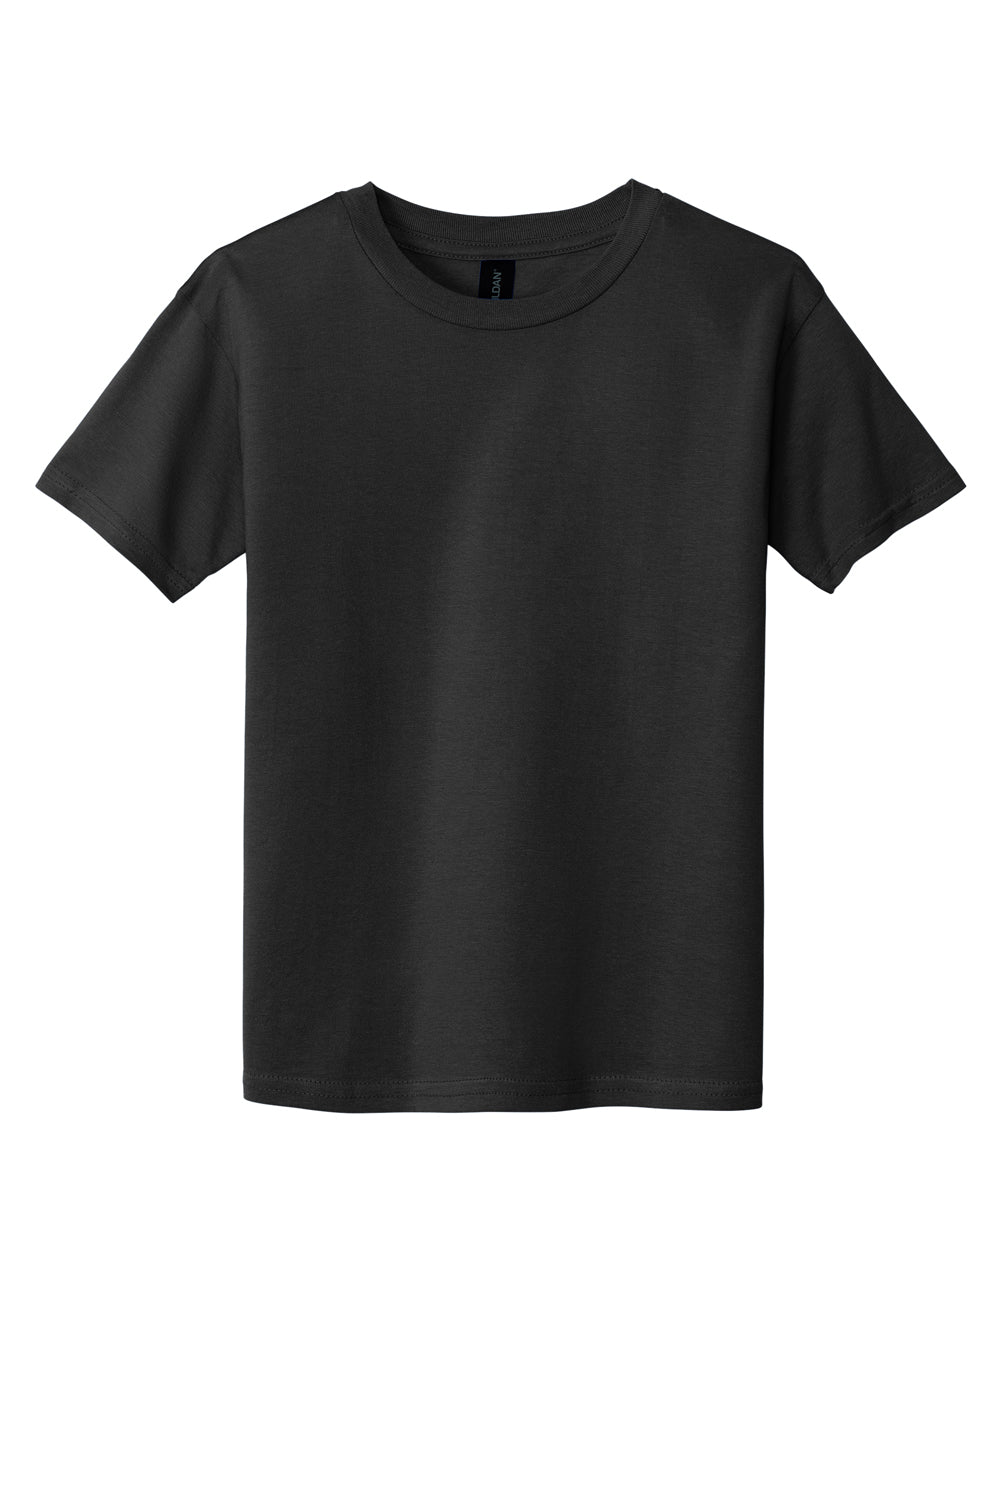 Gildan Youth Softstyle Short Sleeve Crewneck T-Shirt Black Flat Front